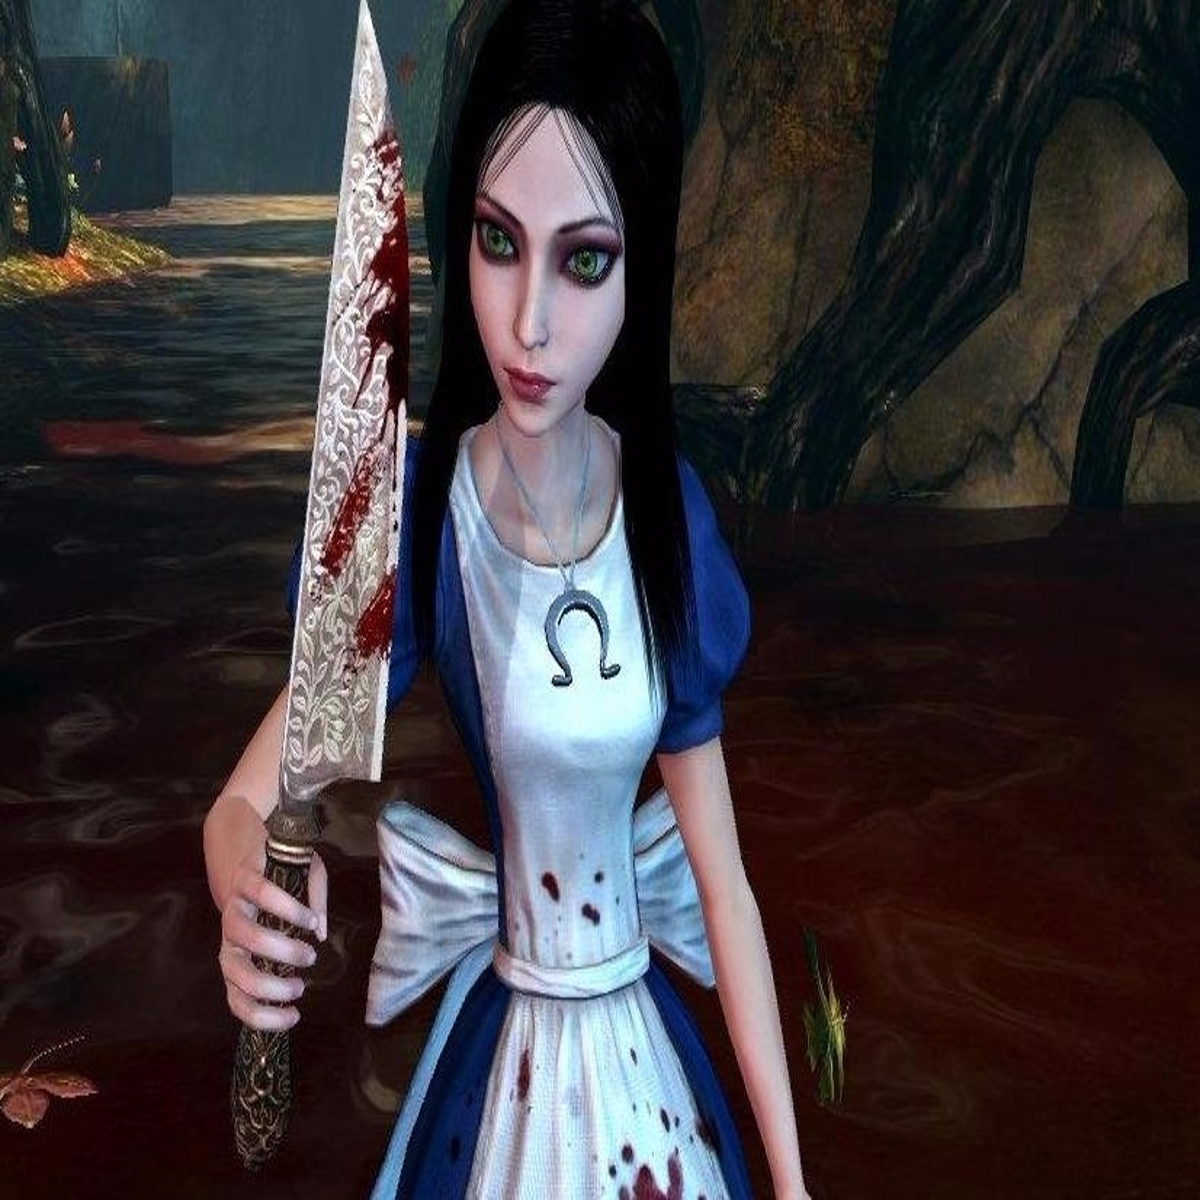 Alice: Madness Returns para Xbox 360